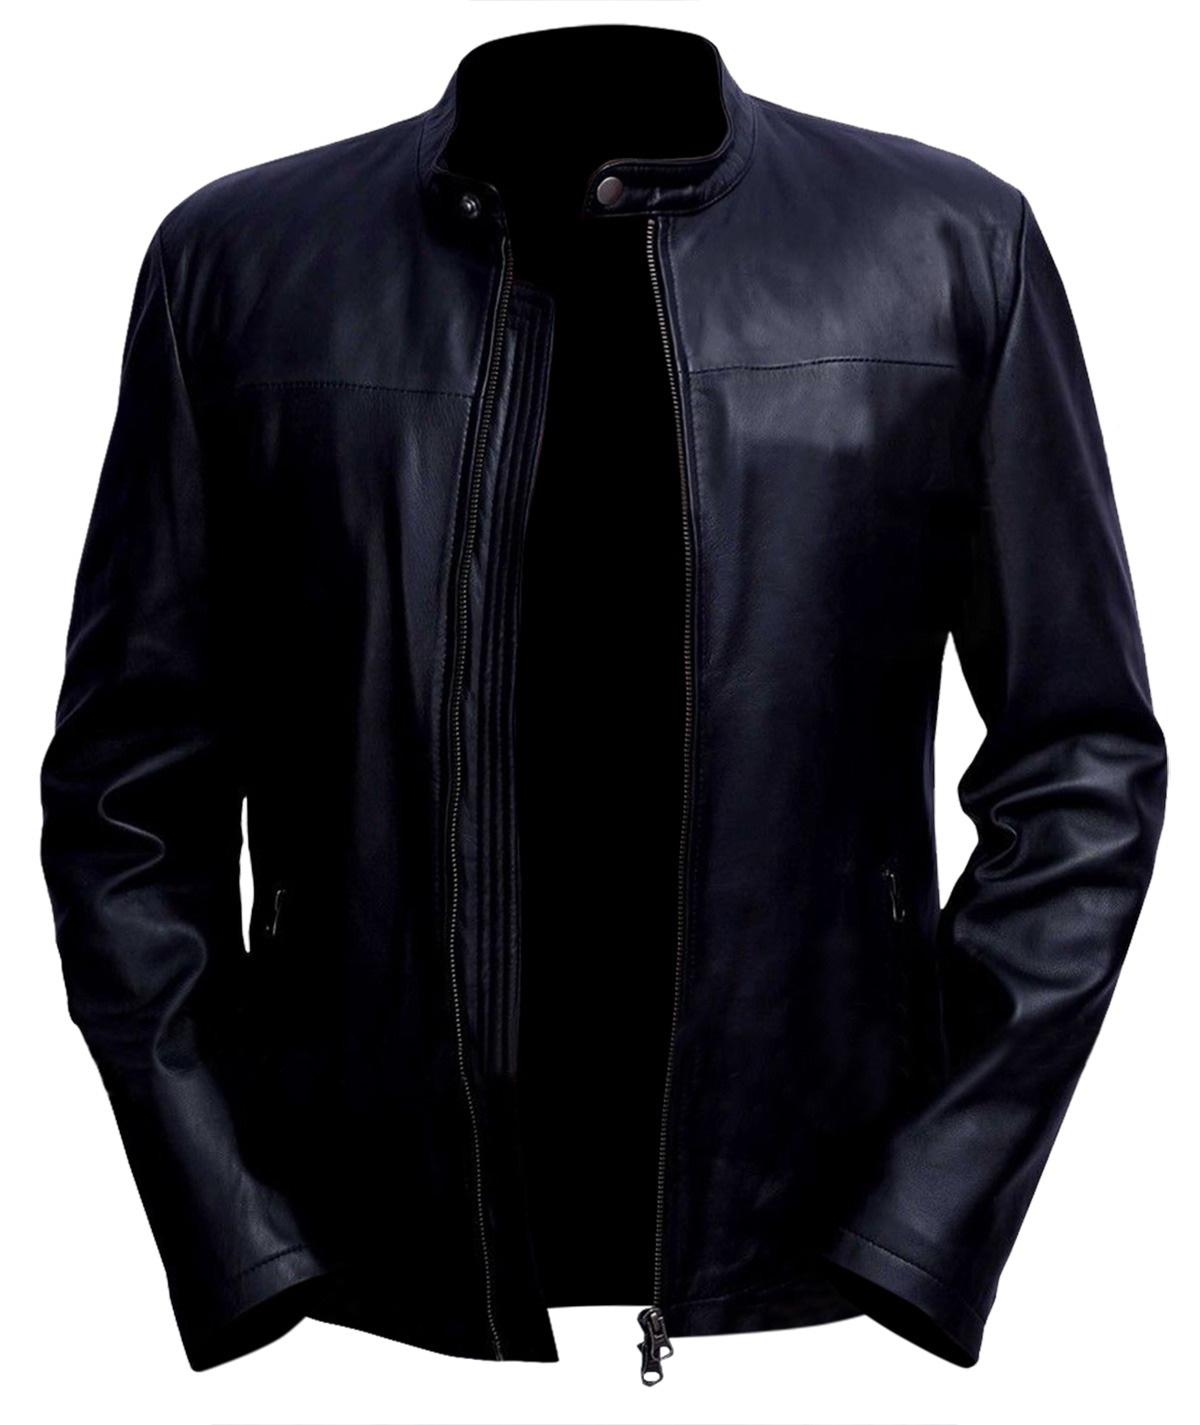 Matt Bomer Slim Fitted Retro Biker Vintage Black Leather Jacket